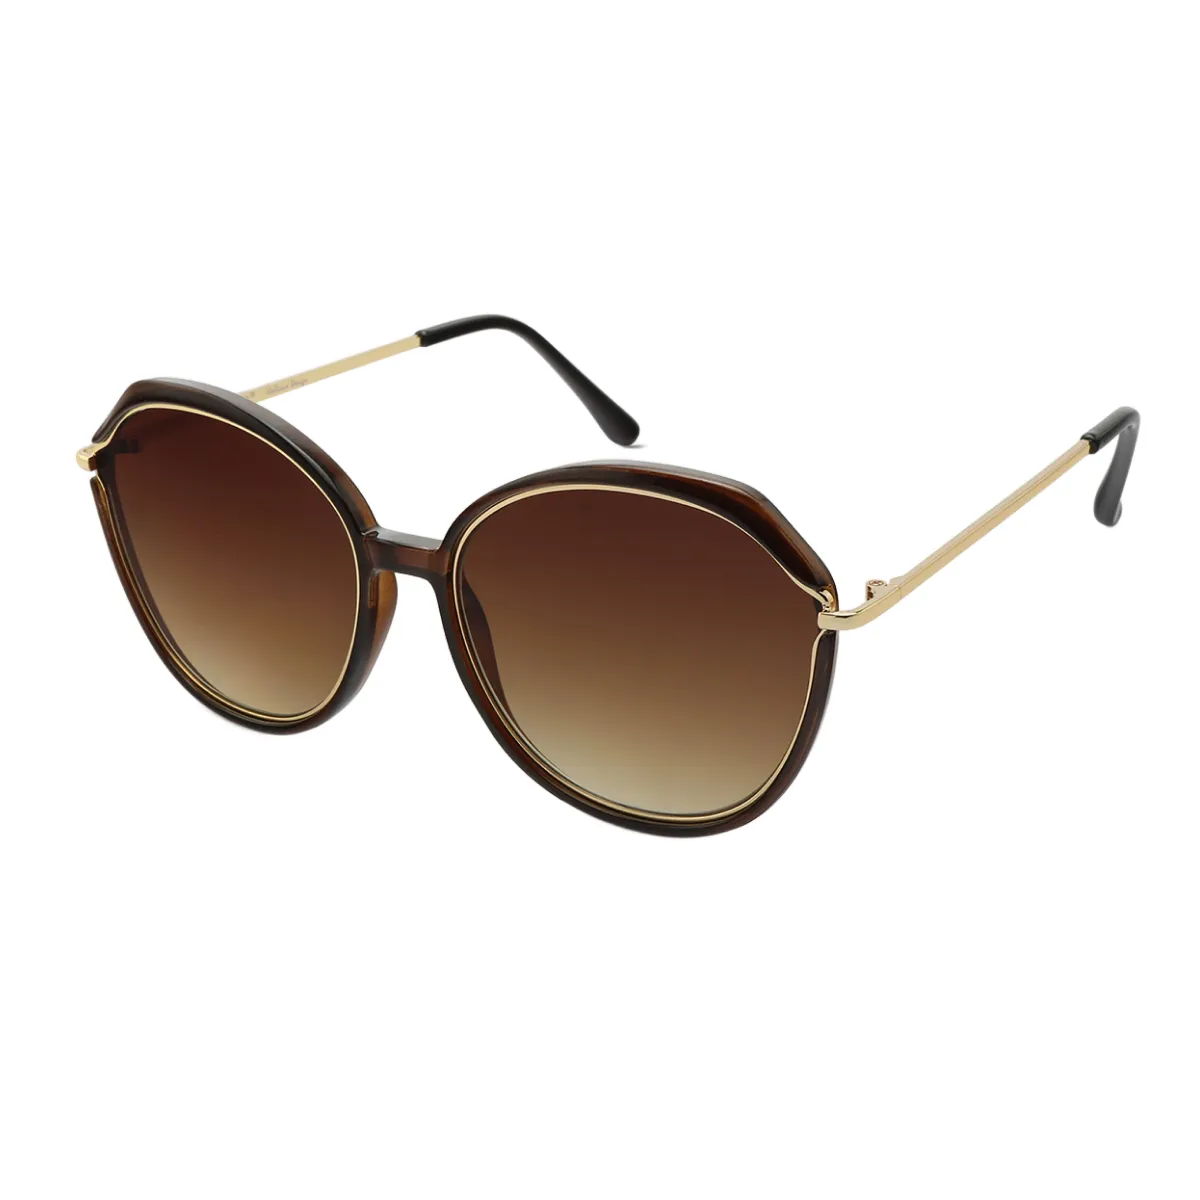 Susanna - Round Brown Gold Sunglasses for Women